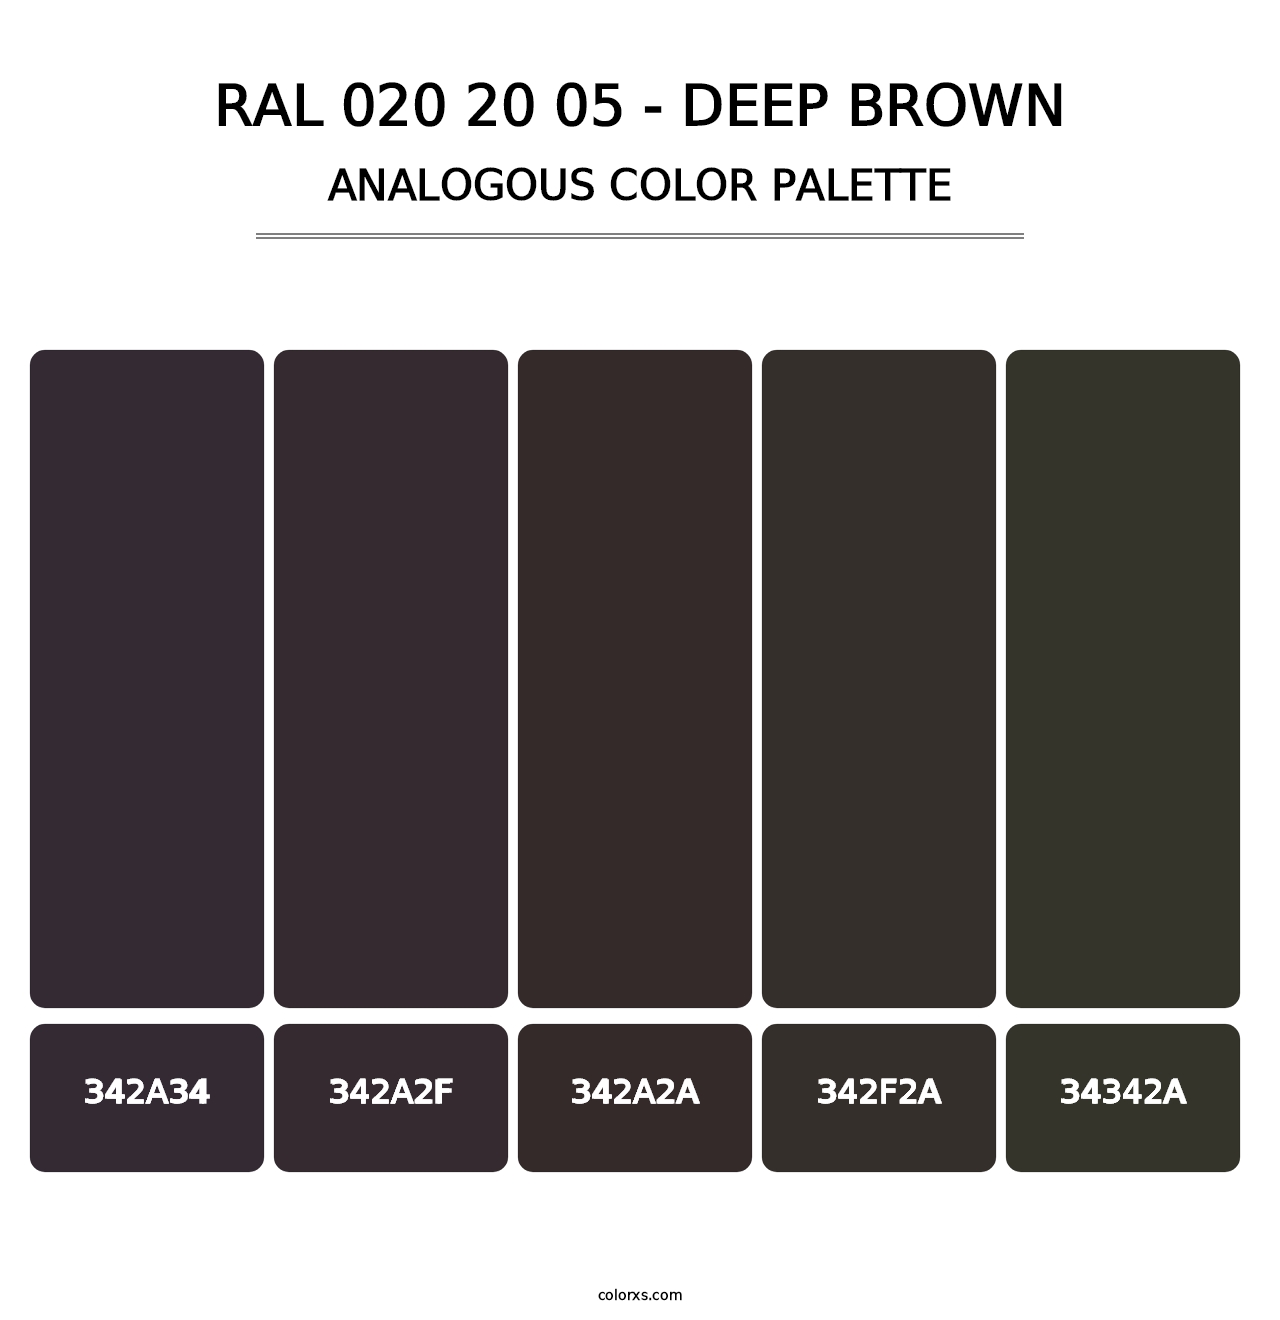 RAL 020 20 05 - Deep Brown - Analogous Color Palette